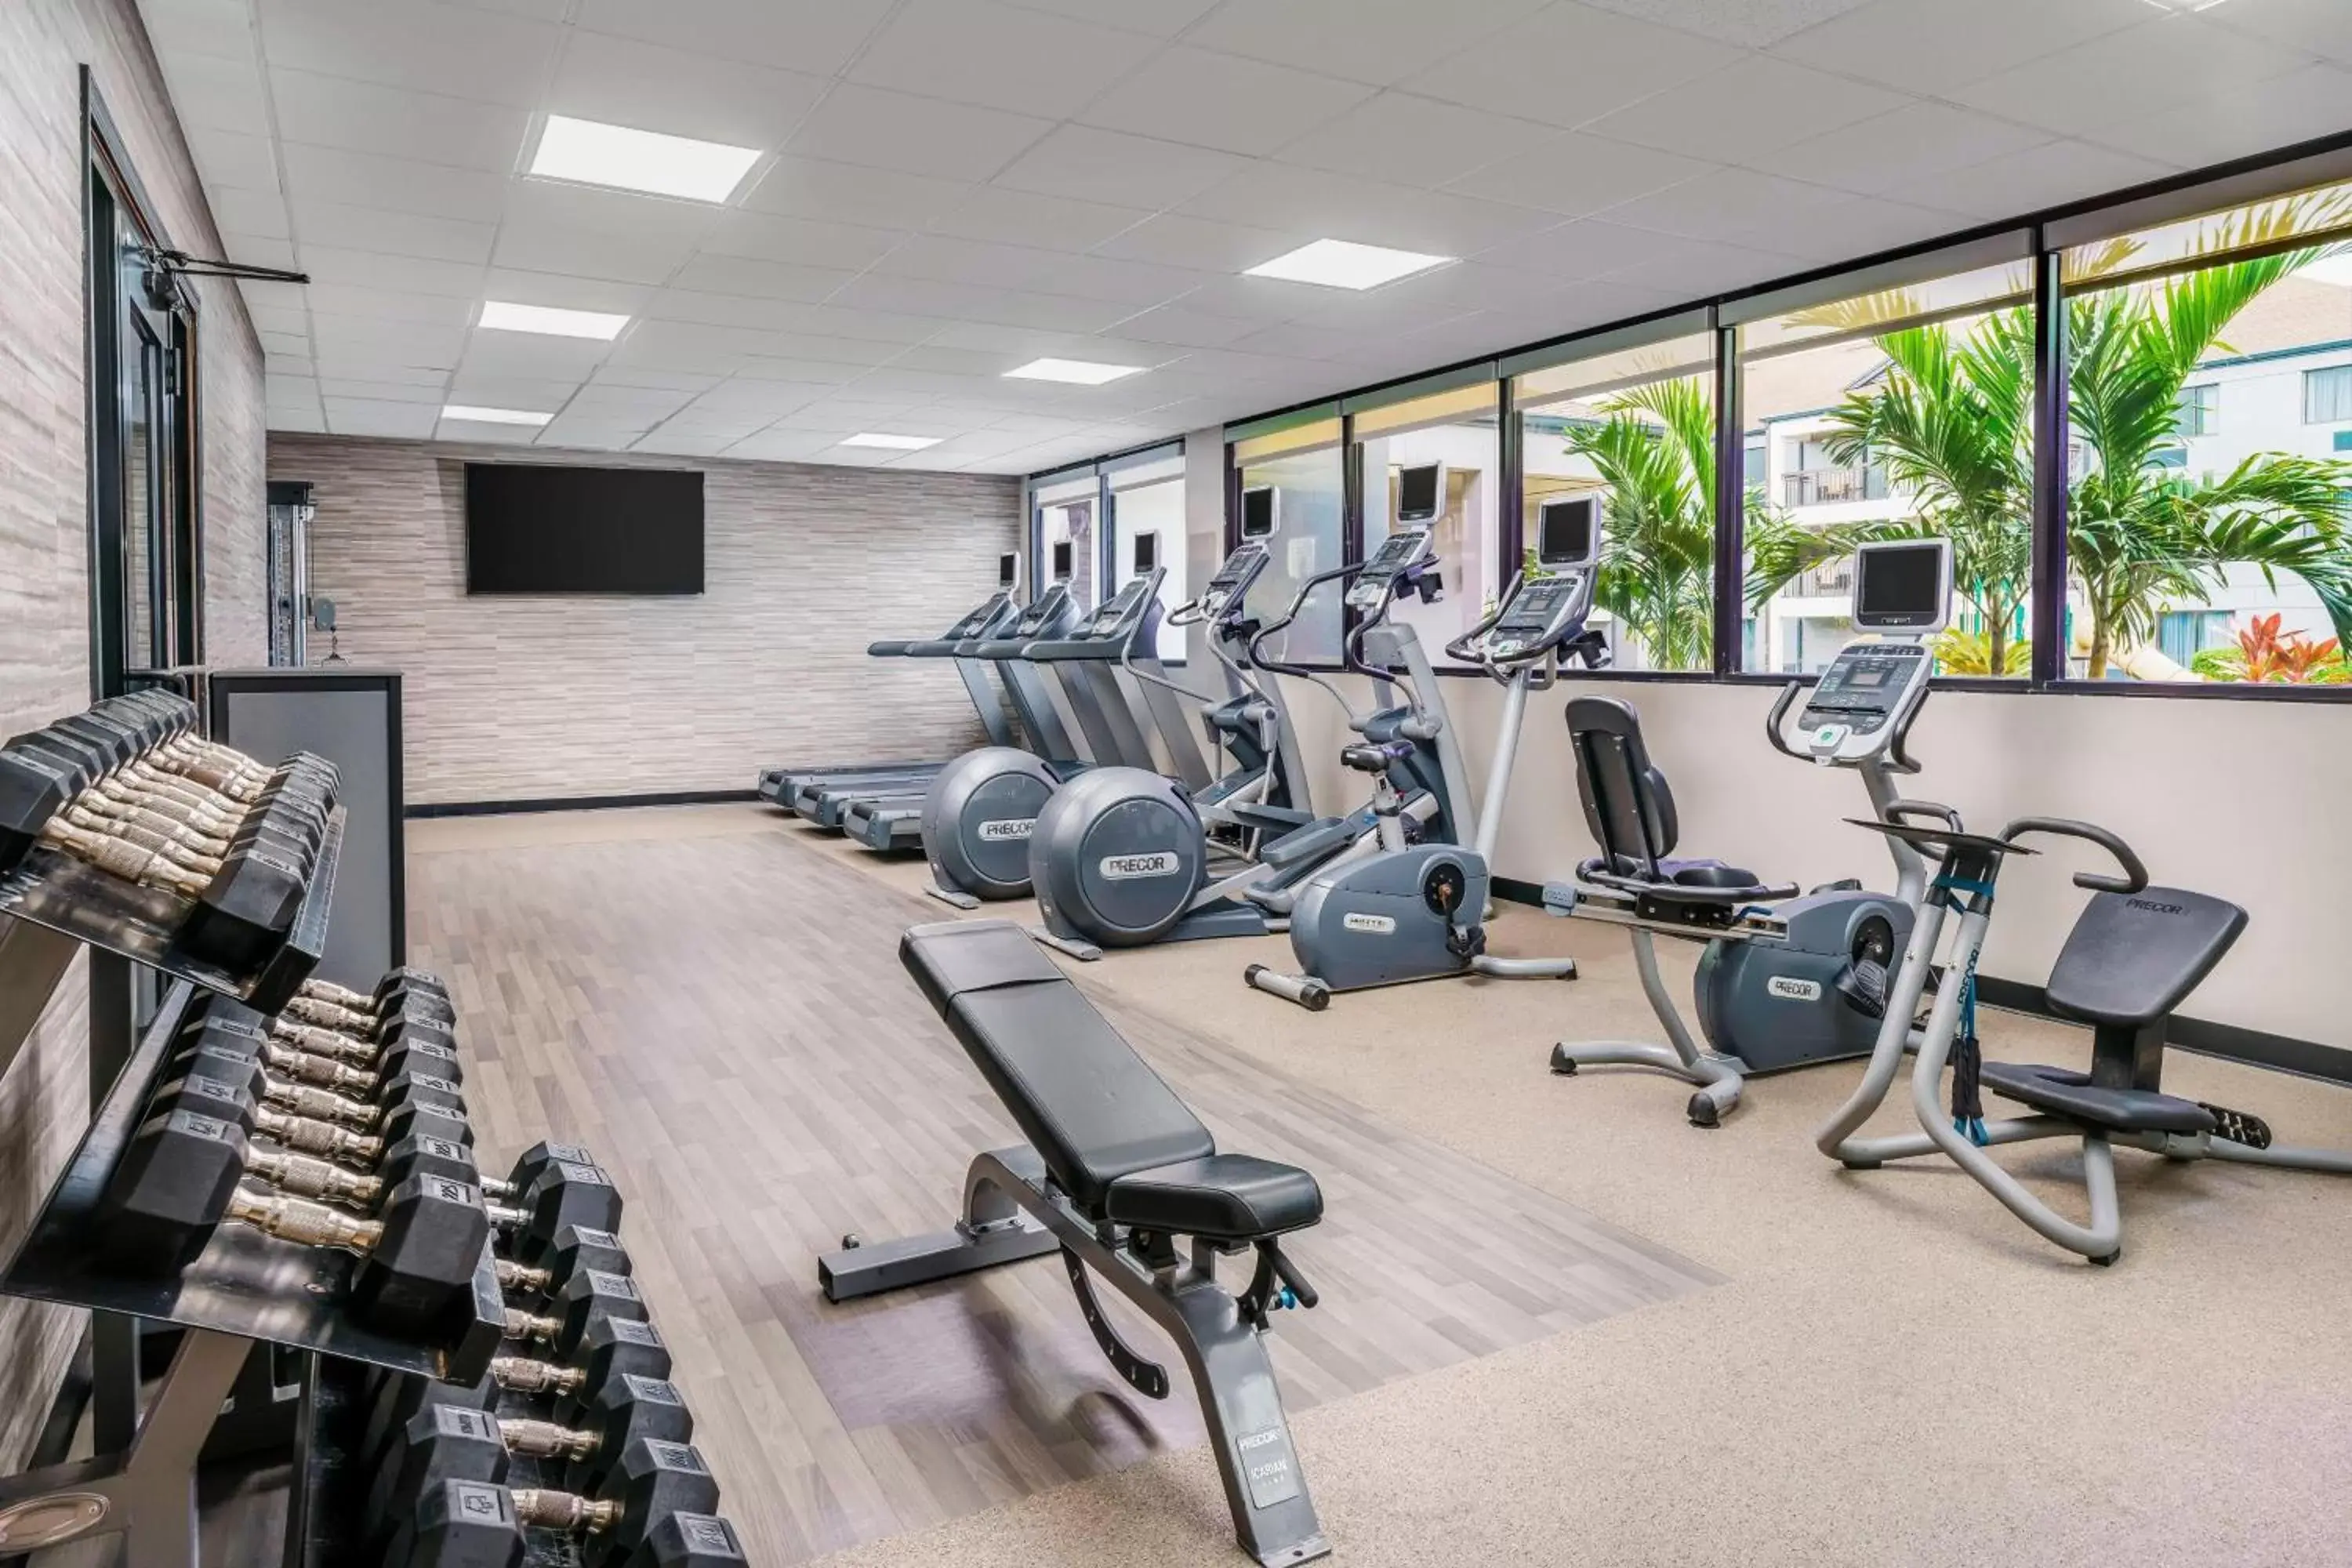 Fitness centre/facilities, Fitness Center/Facilities in Courtyard by Marriott Orlando Lake Buena Vista at Vista Centre